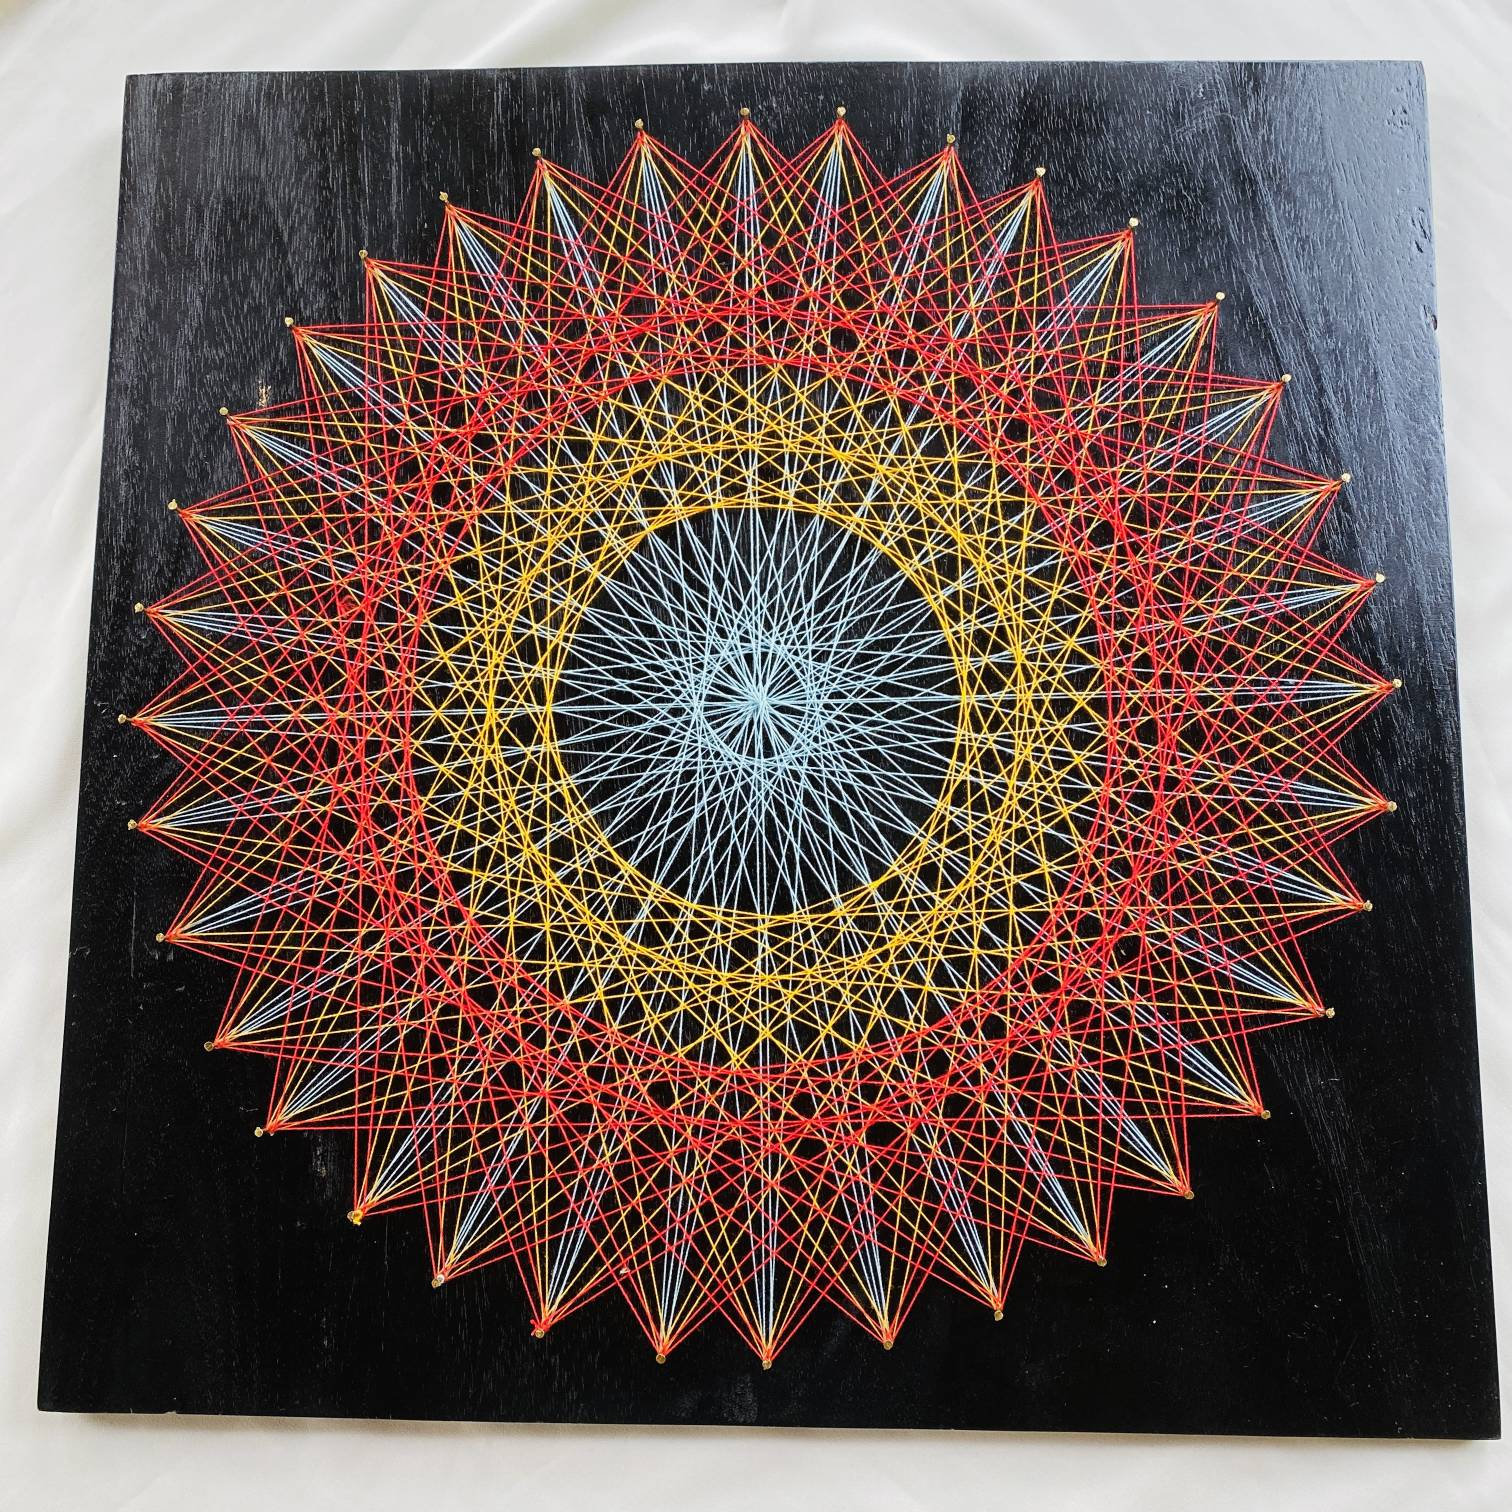 DIY String Art Kit for Adults, 12x12 Geometric Nail & Thread Art Wall  Decor, Meditative Mindful Activity Gift, Living Room Home Decor 